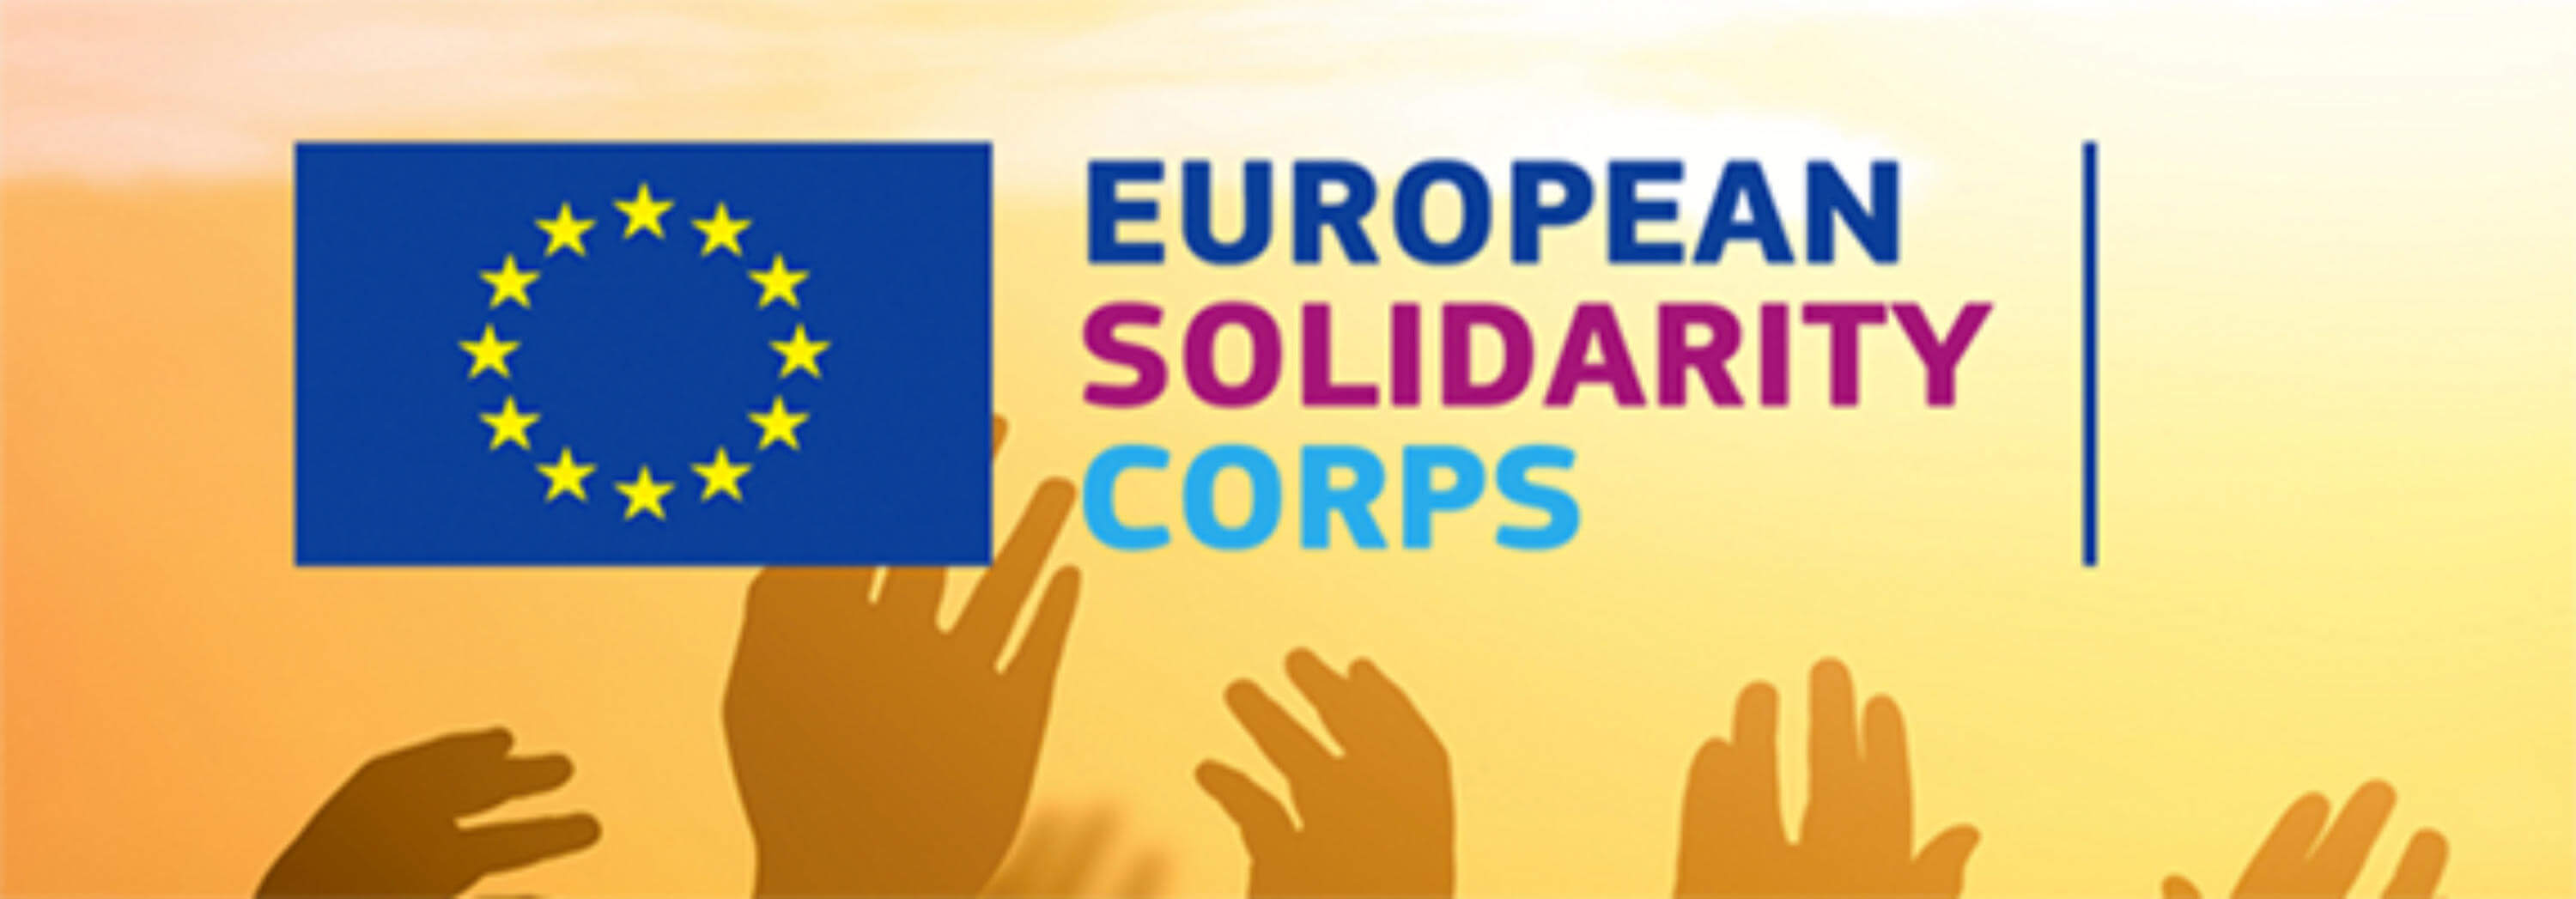 EU Solidarity Corps Inclusion Europe